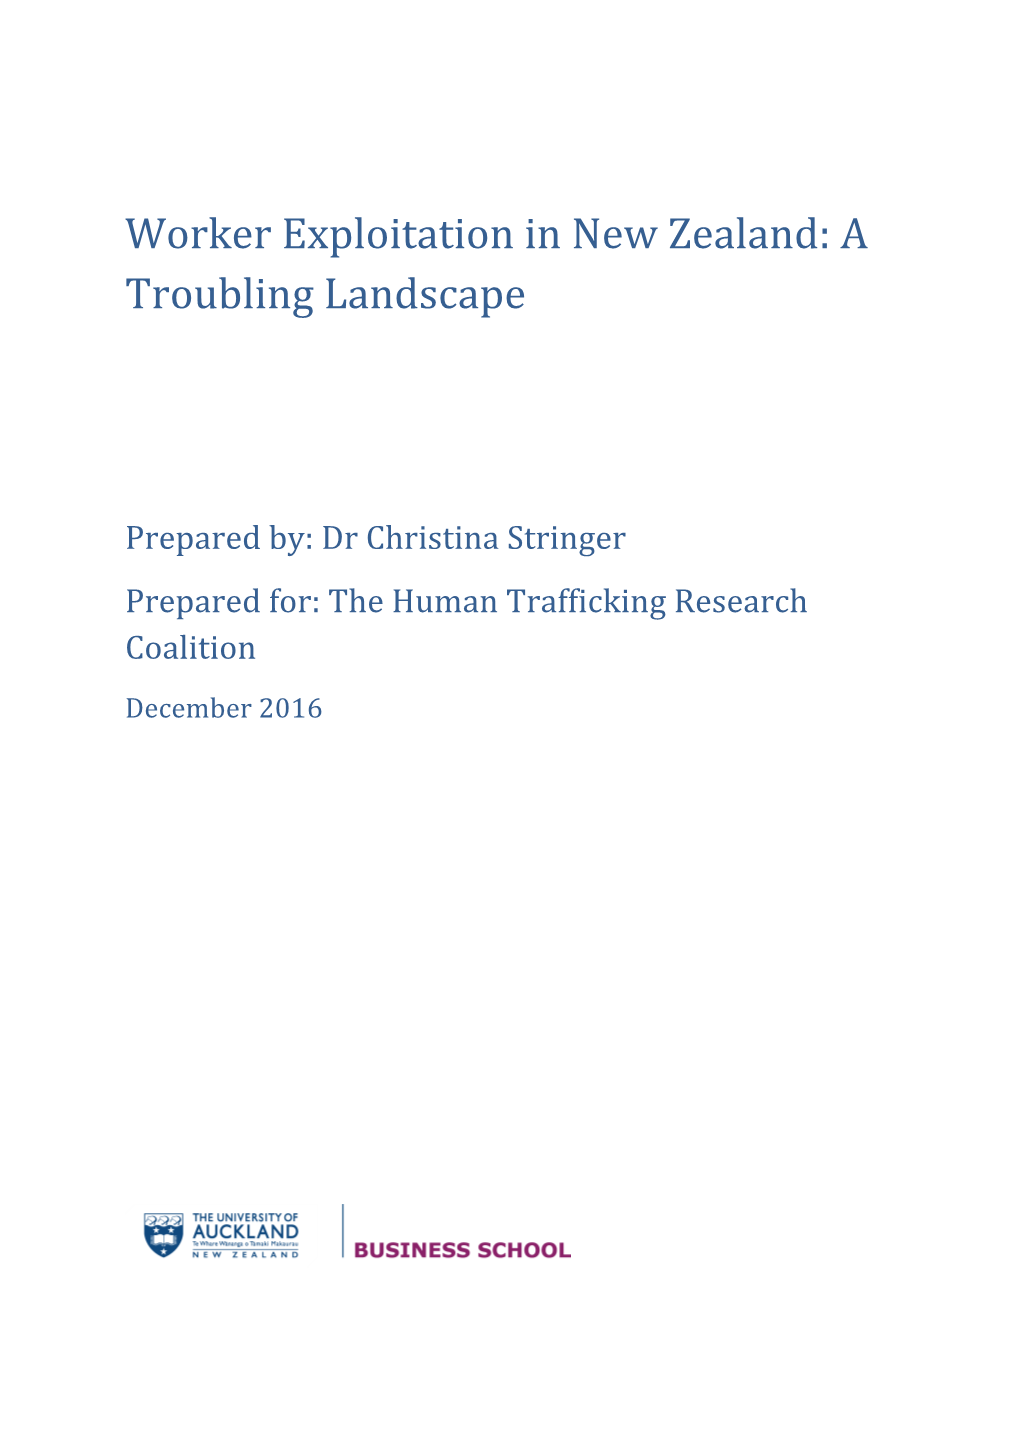 Worker Exploitation in New Zealand: a Troubling Landscape